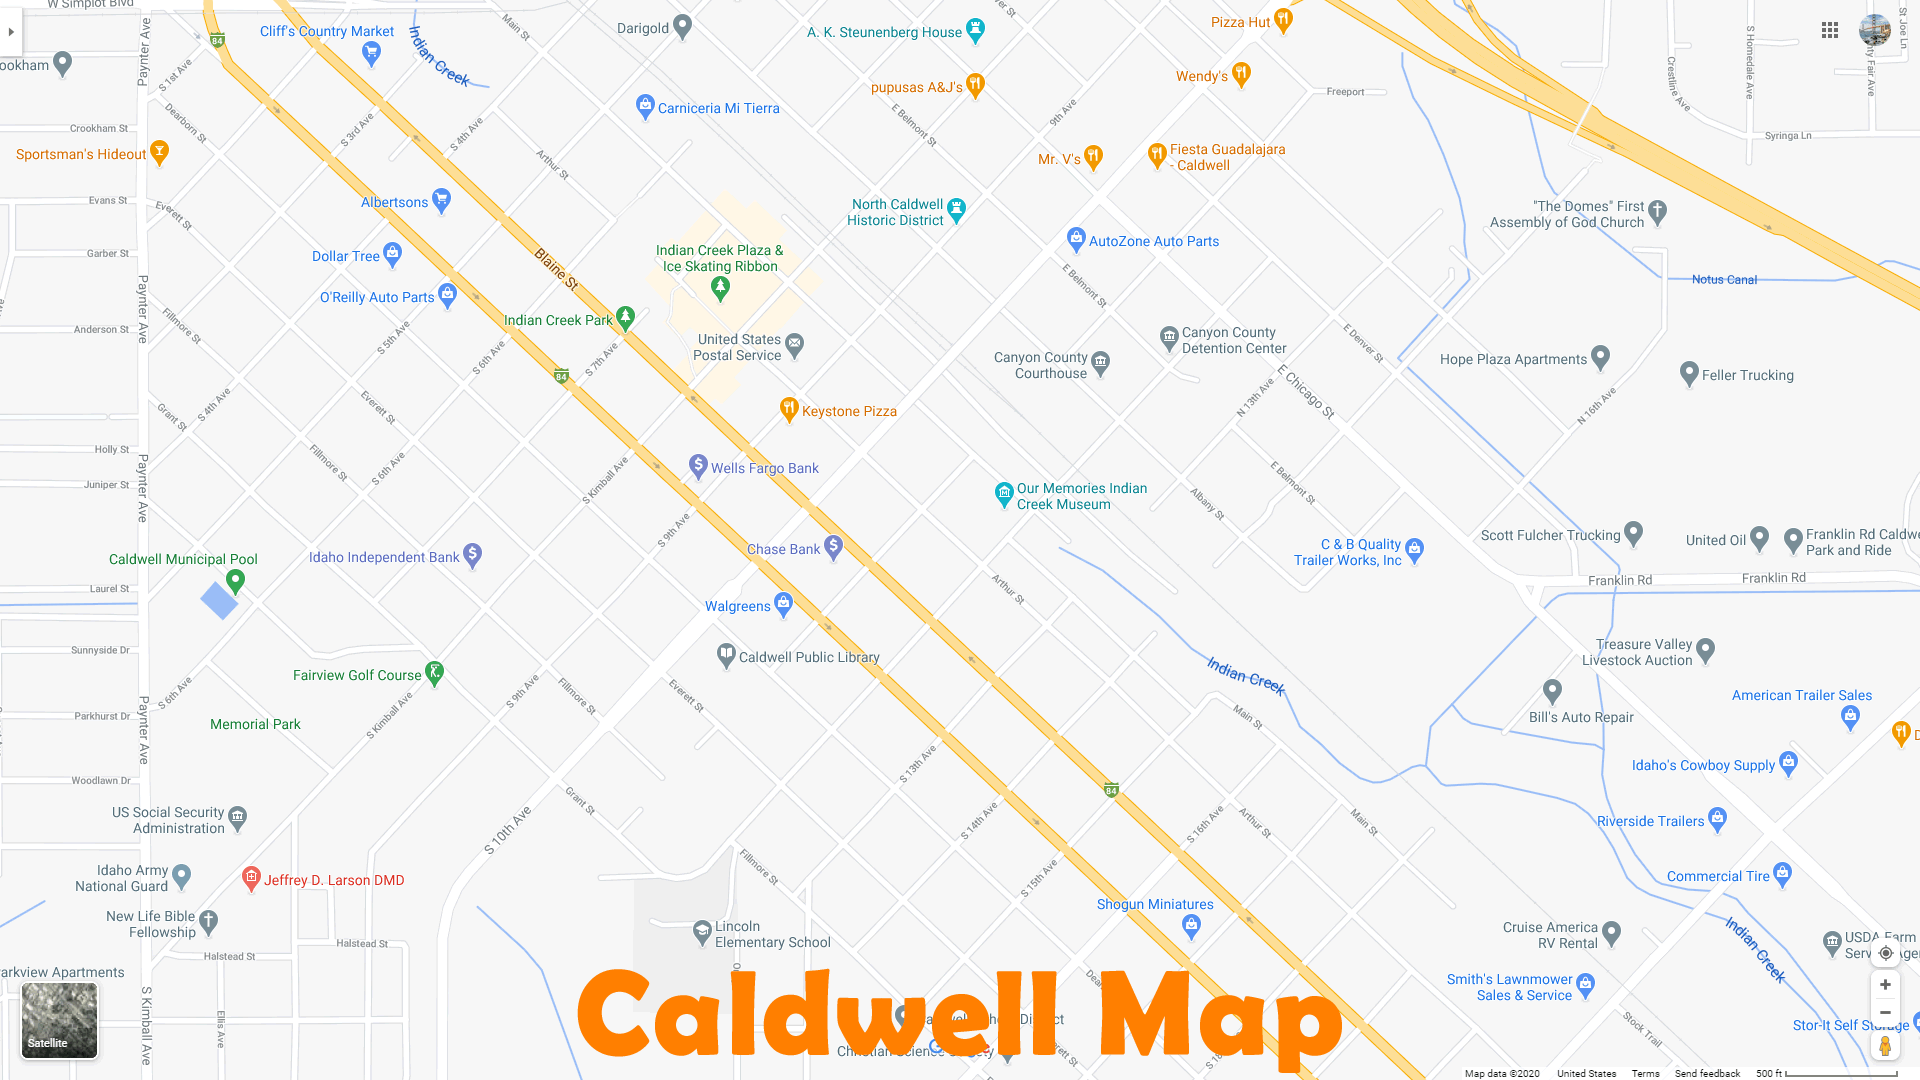 Caldwell plan